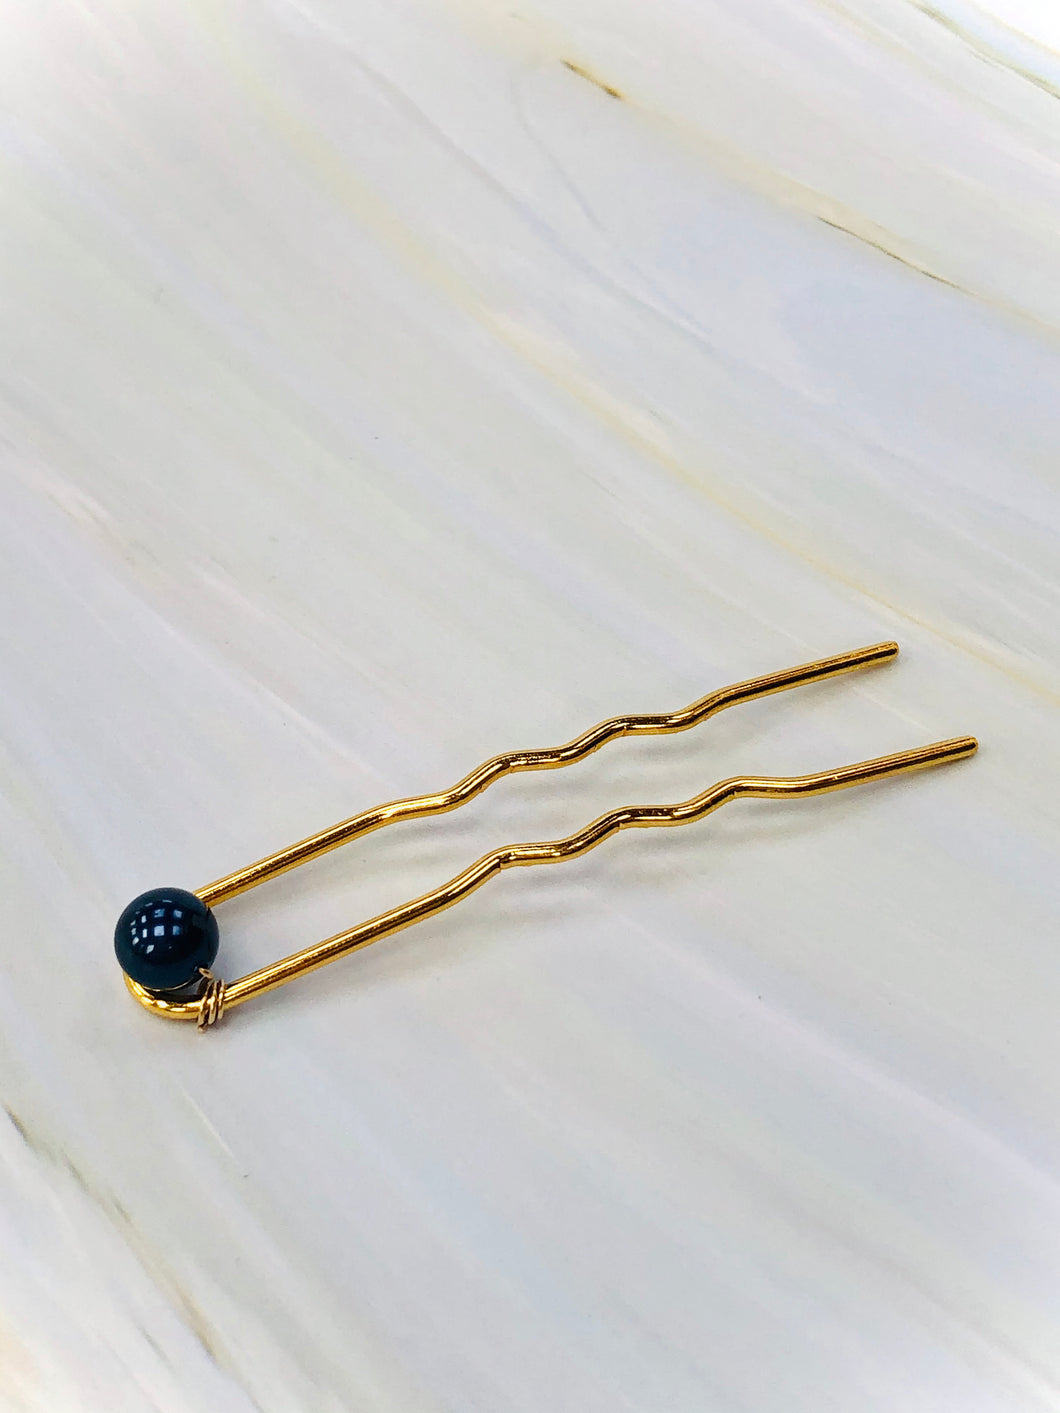 Blue Swarovski Pearl Hair Pin, Wedding Hair Pin Bridal Hair Pin, Gold hair pin